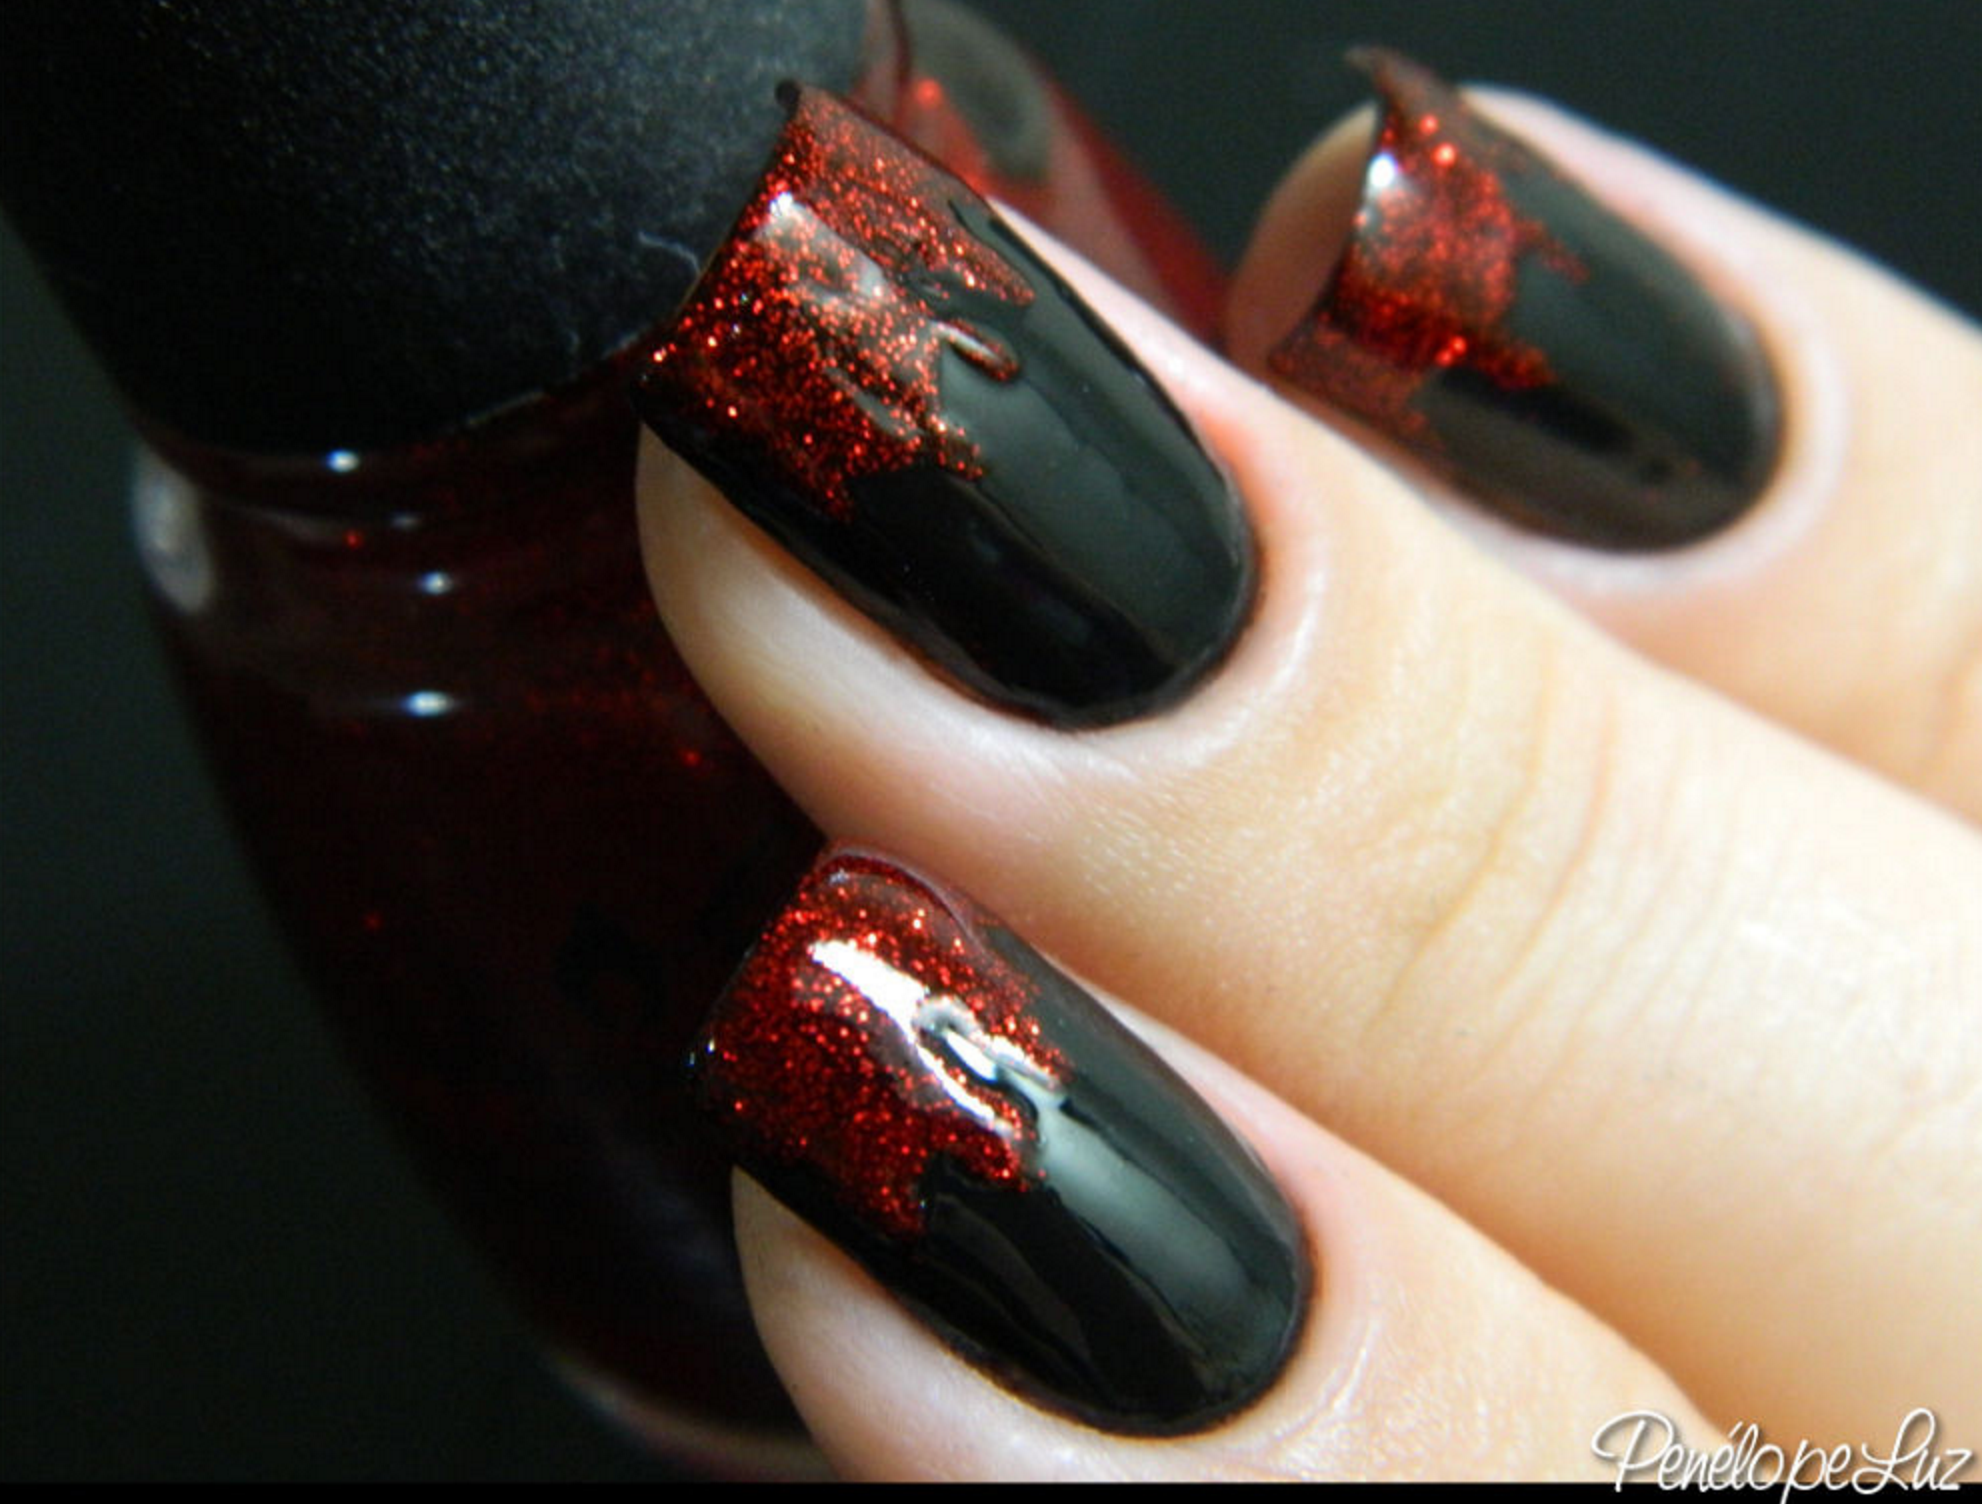 Dripping blood halloween manicure